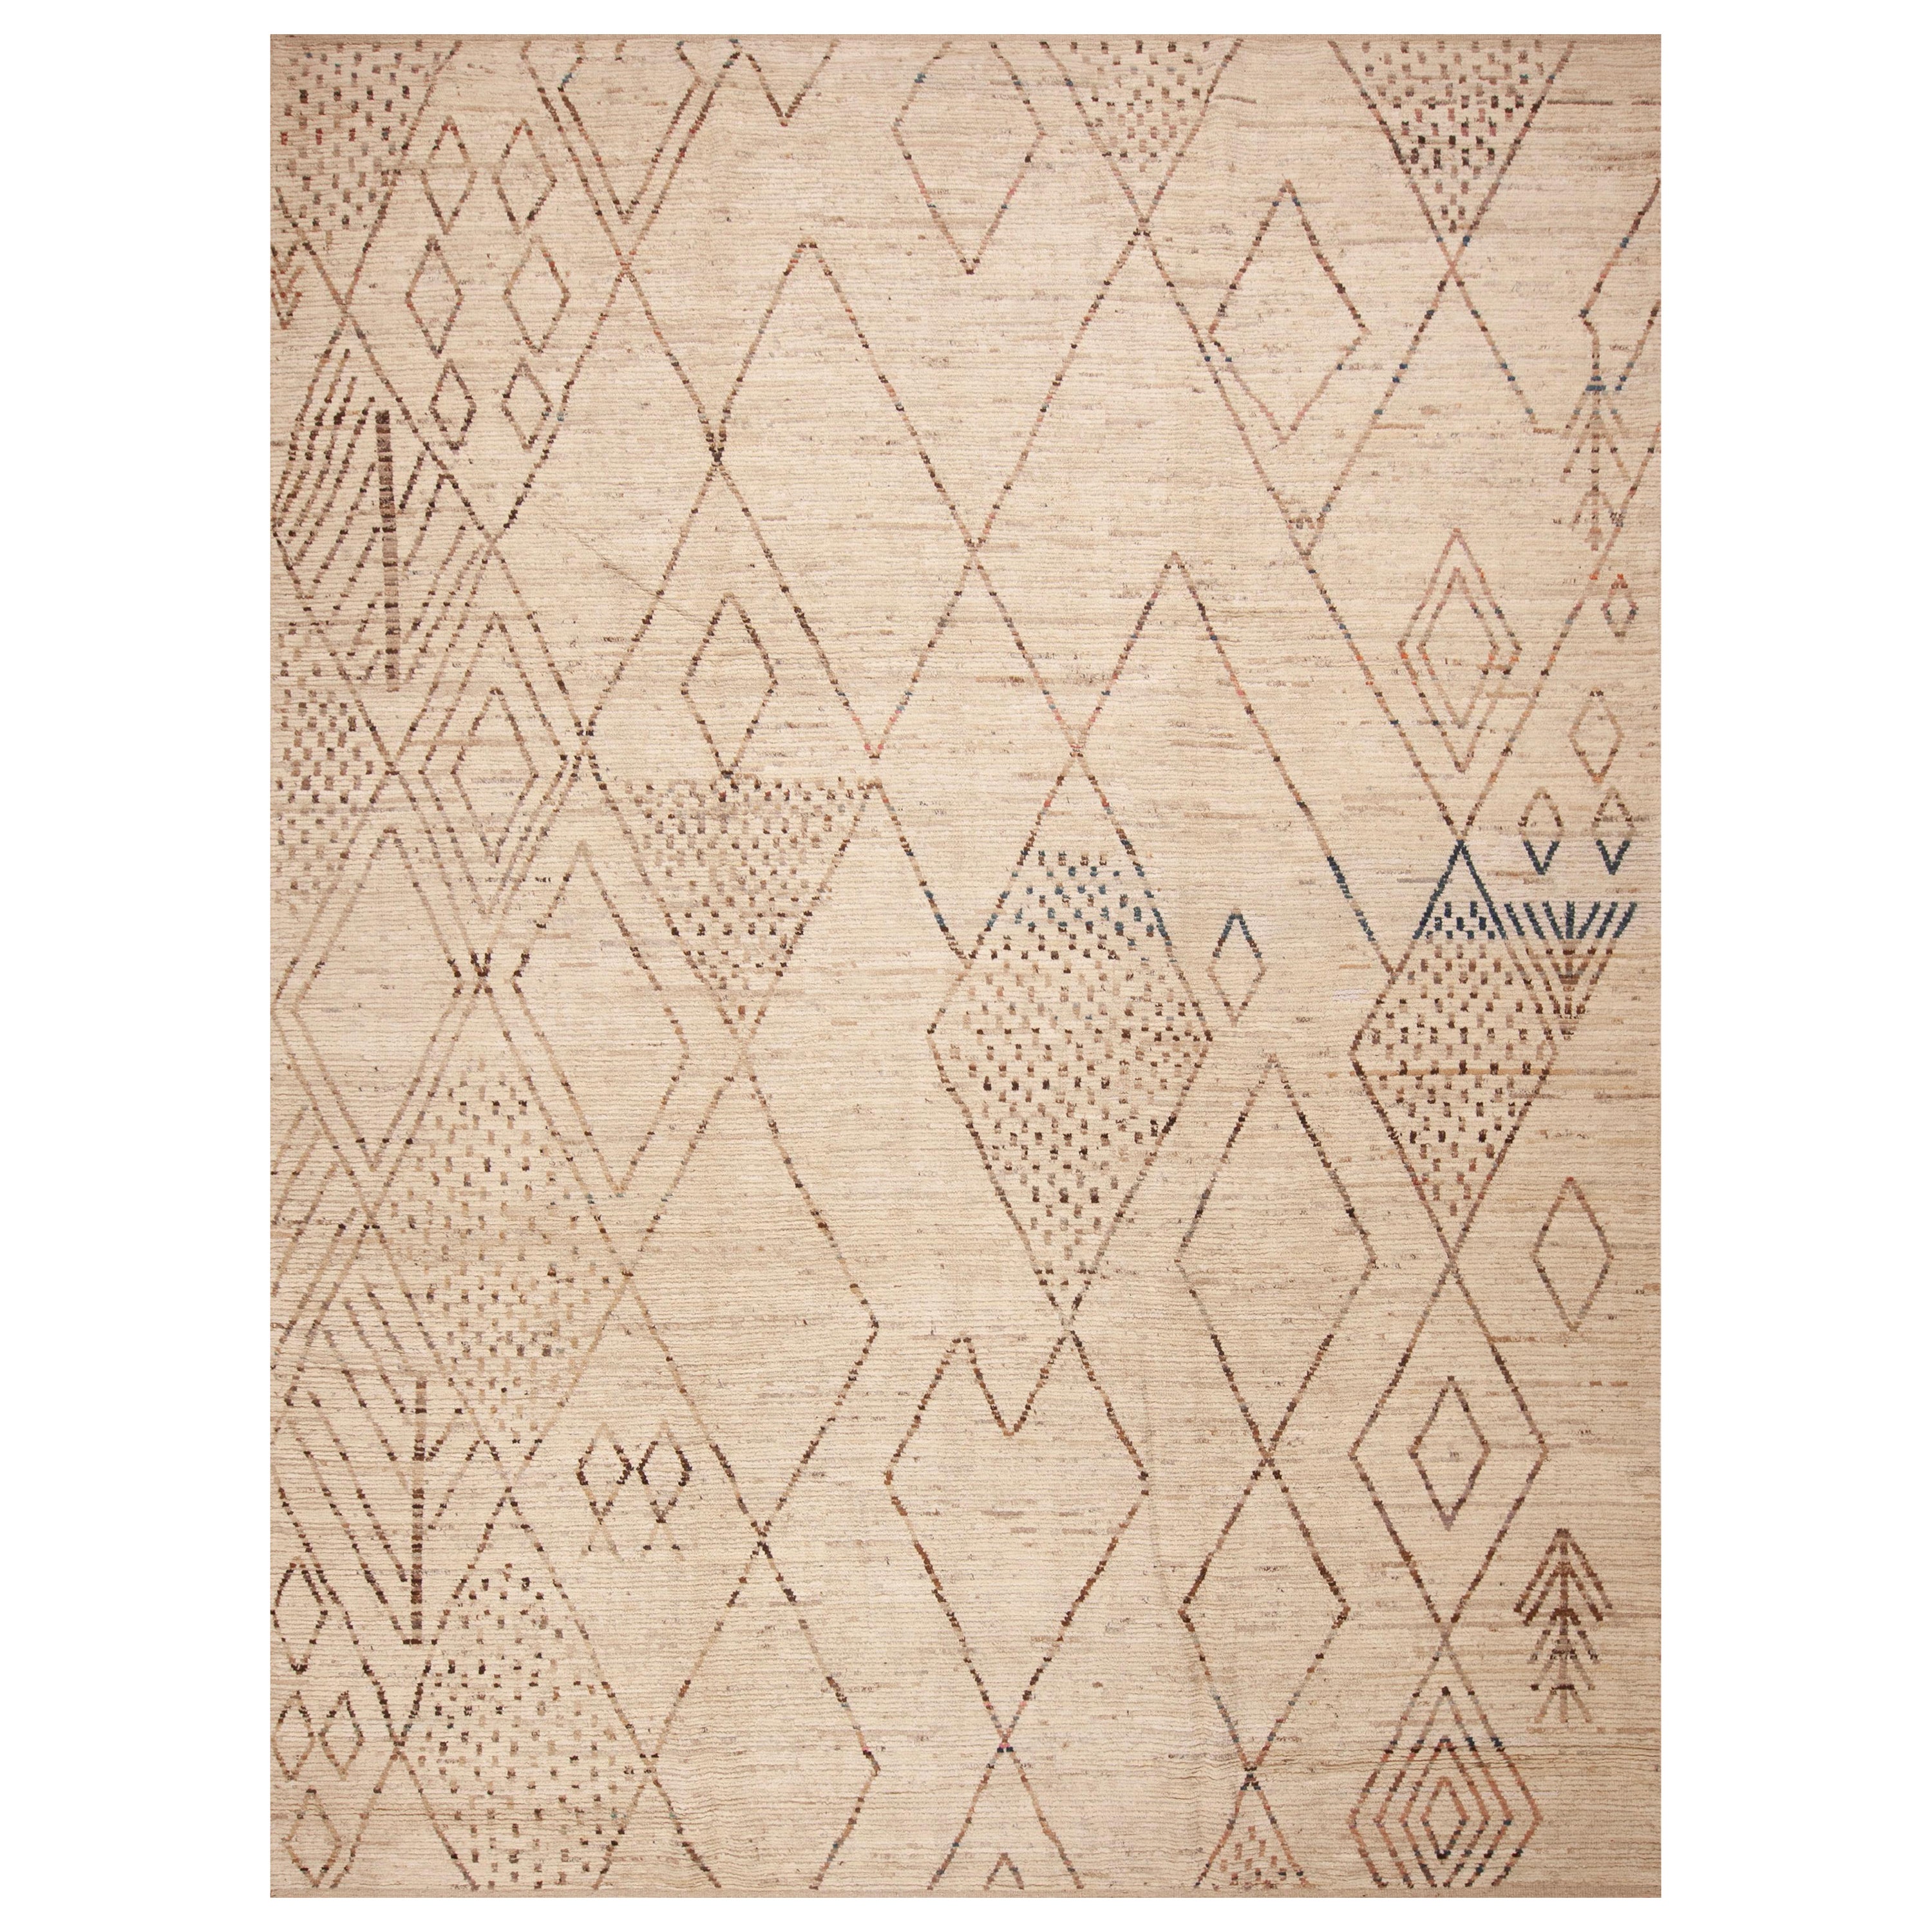 Nazmiyal Collection Tribal Beni Ourain Design Pattern Modern Rug 10'4" x 13'9"